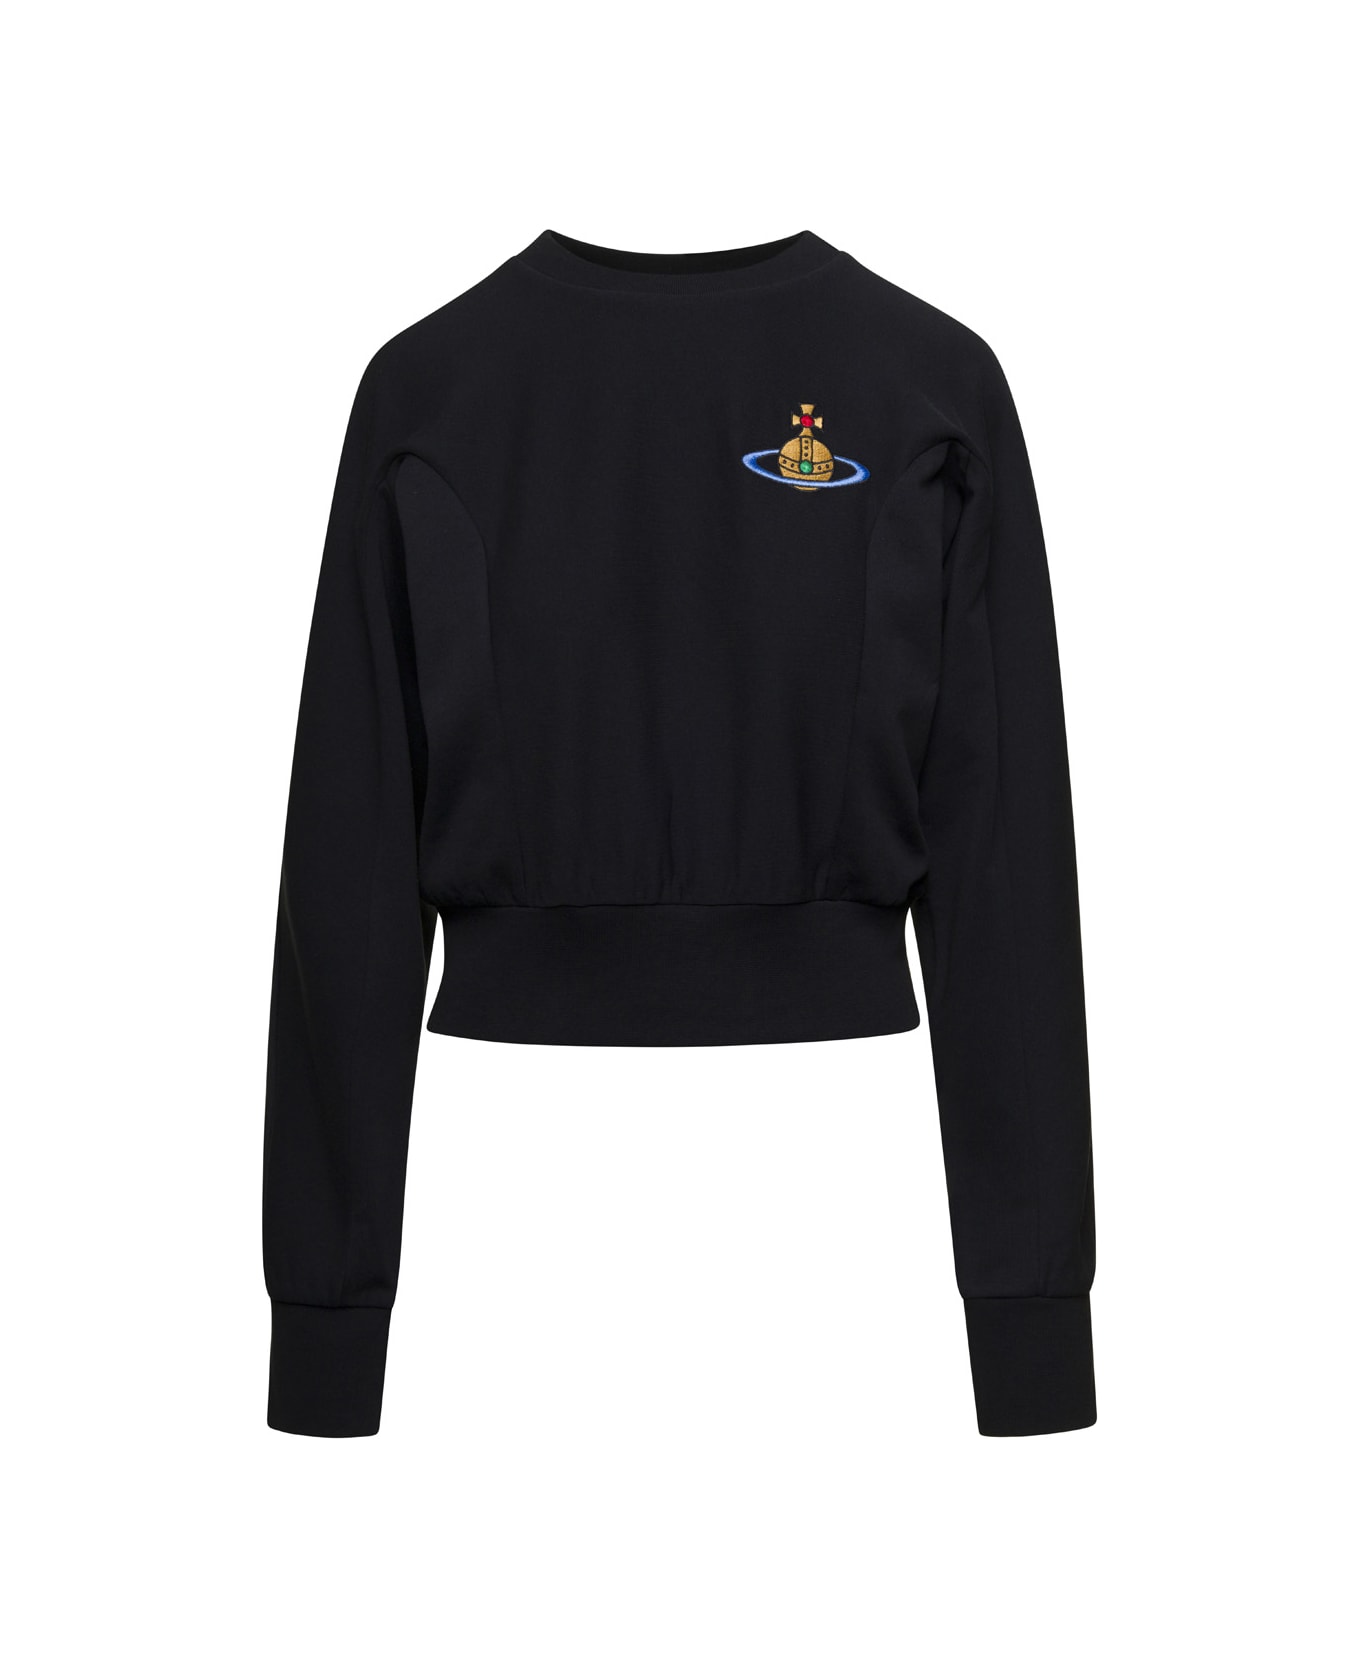 Vivienne Westwood Black Crewneck Sweatshirt With Embroidered Orb Logo In Cotton Woman - Black